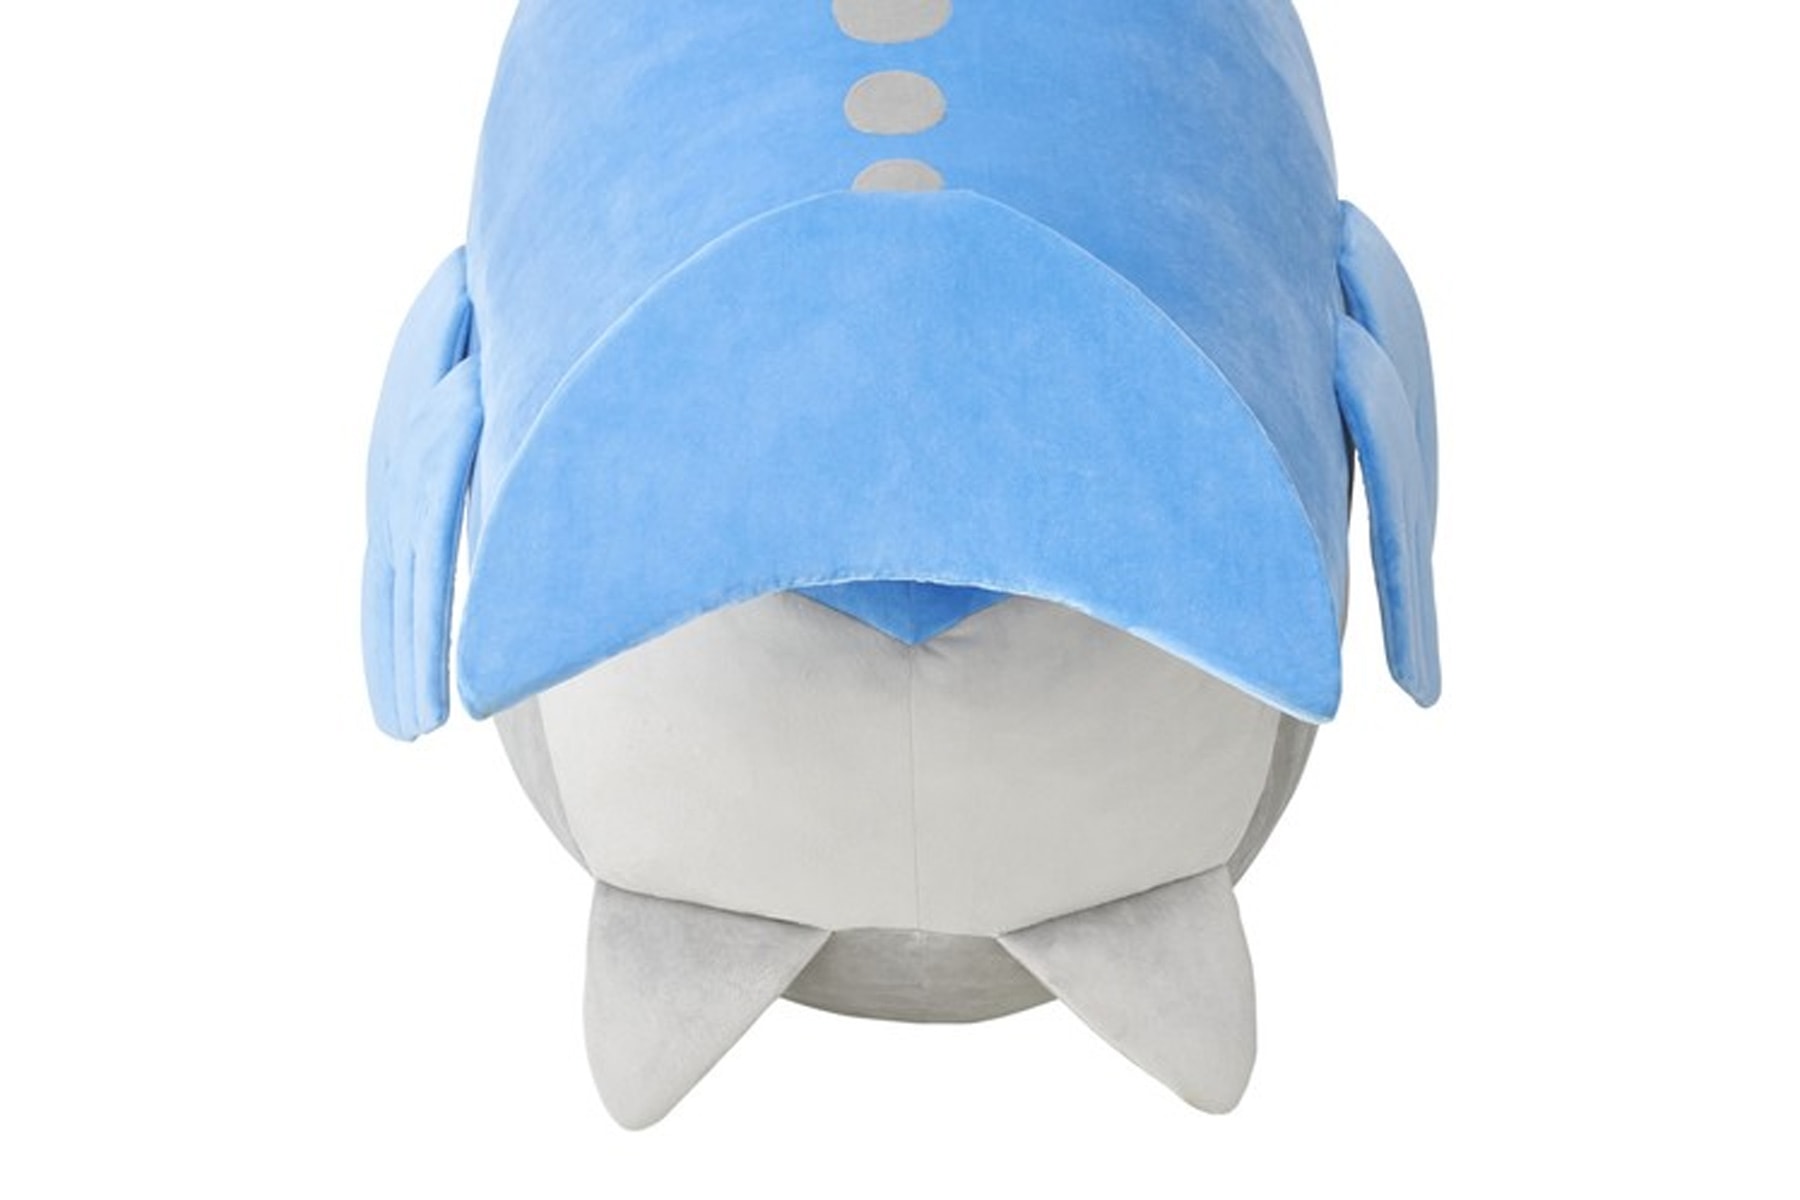 Pokémon 推出 1:10 尺寸「吼鯨王 Wailord」全新毛絨玩偶